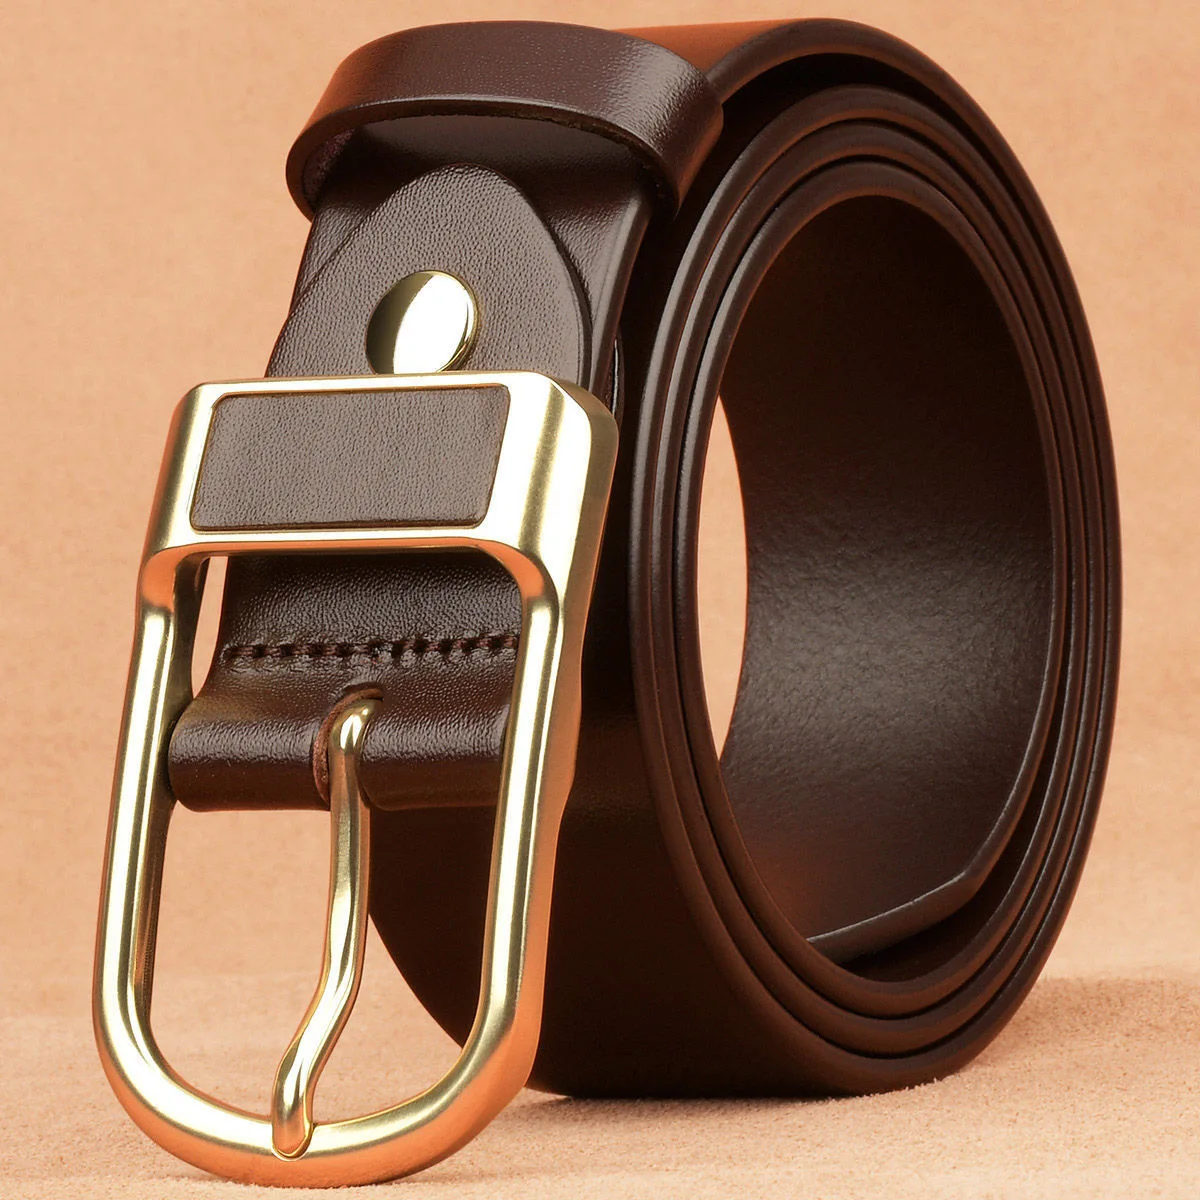 

Men Genuine Leather Belt 110cm 115cm 120cm 125cm 130cm Reversible Buckle Brown and Black Business Dress Belts for Men Waistband